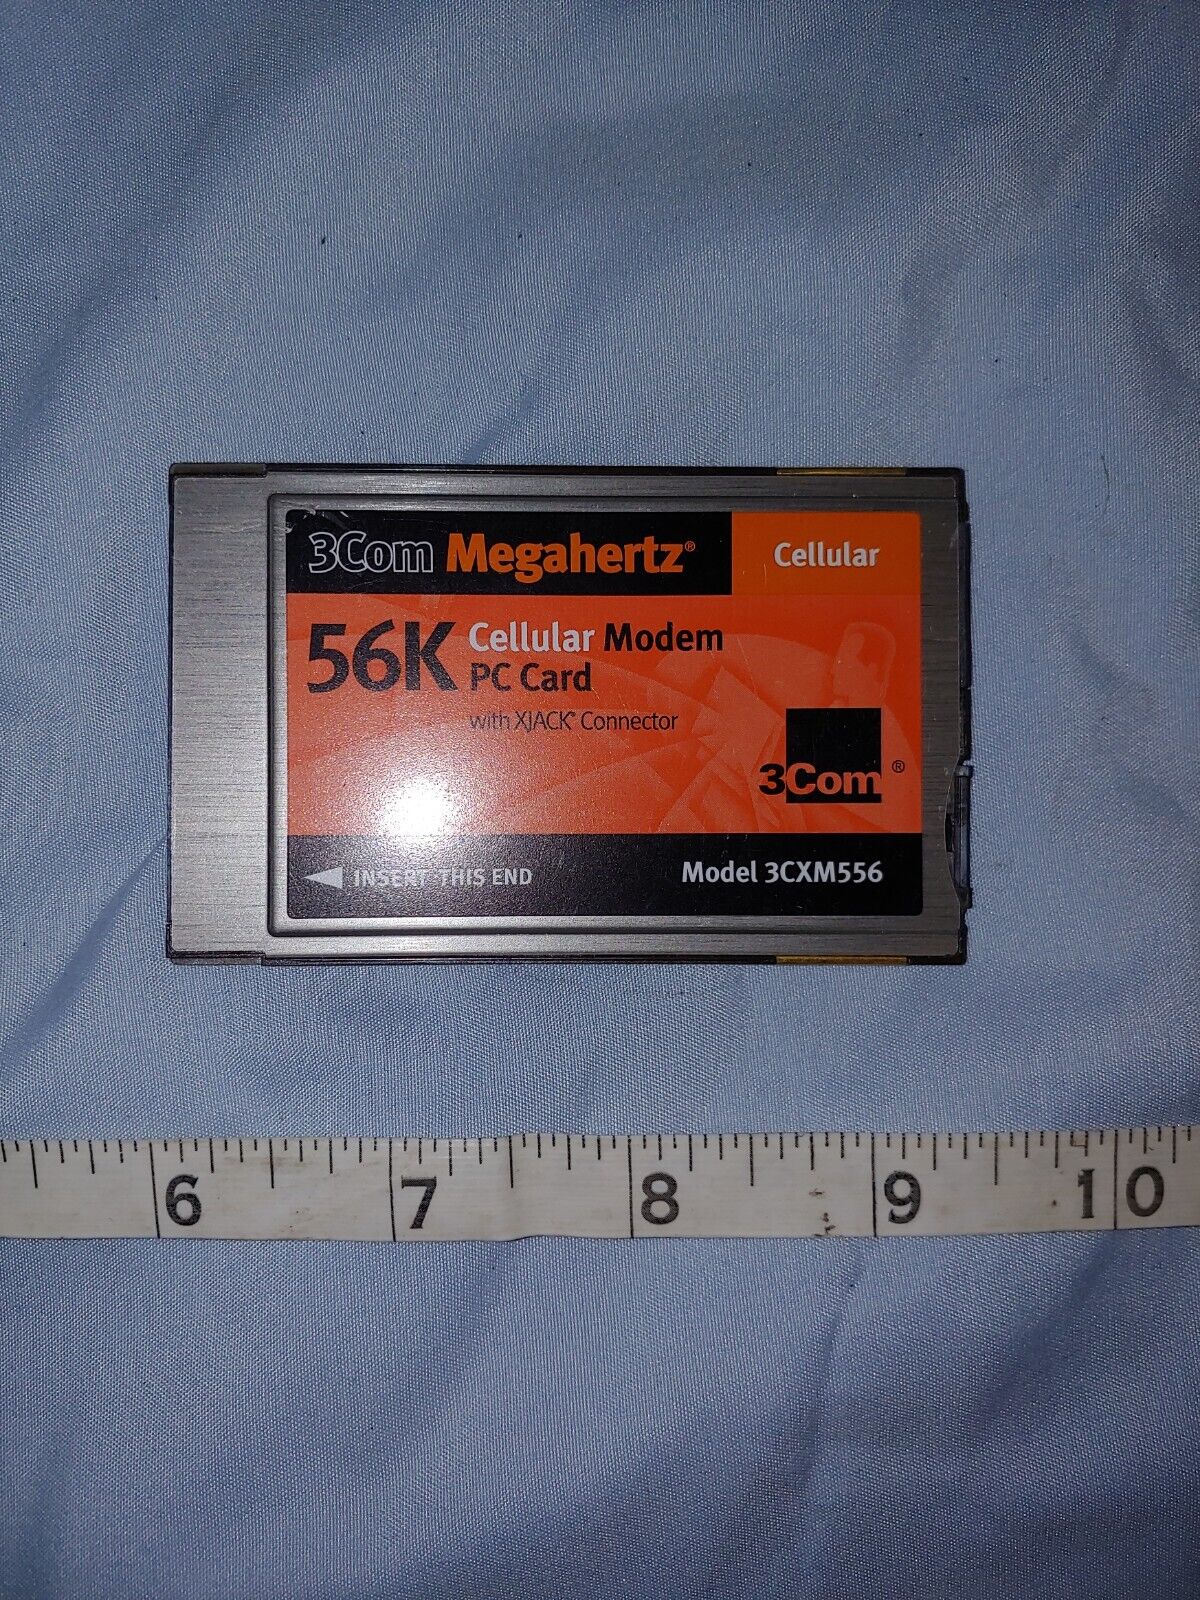 3Com Megahertz 56K Cellular Modem PC Card  Used